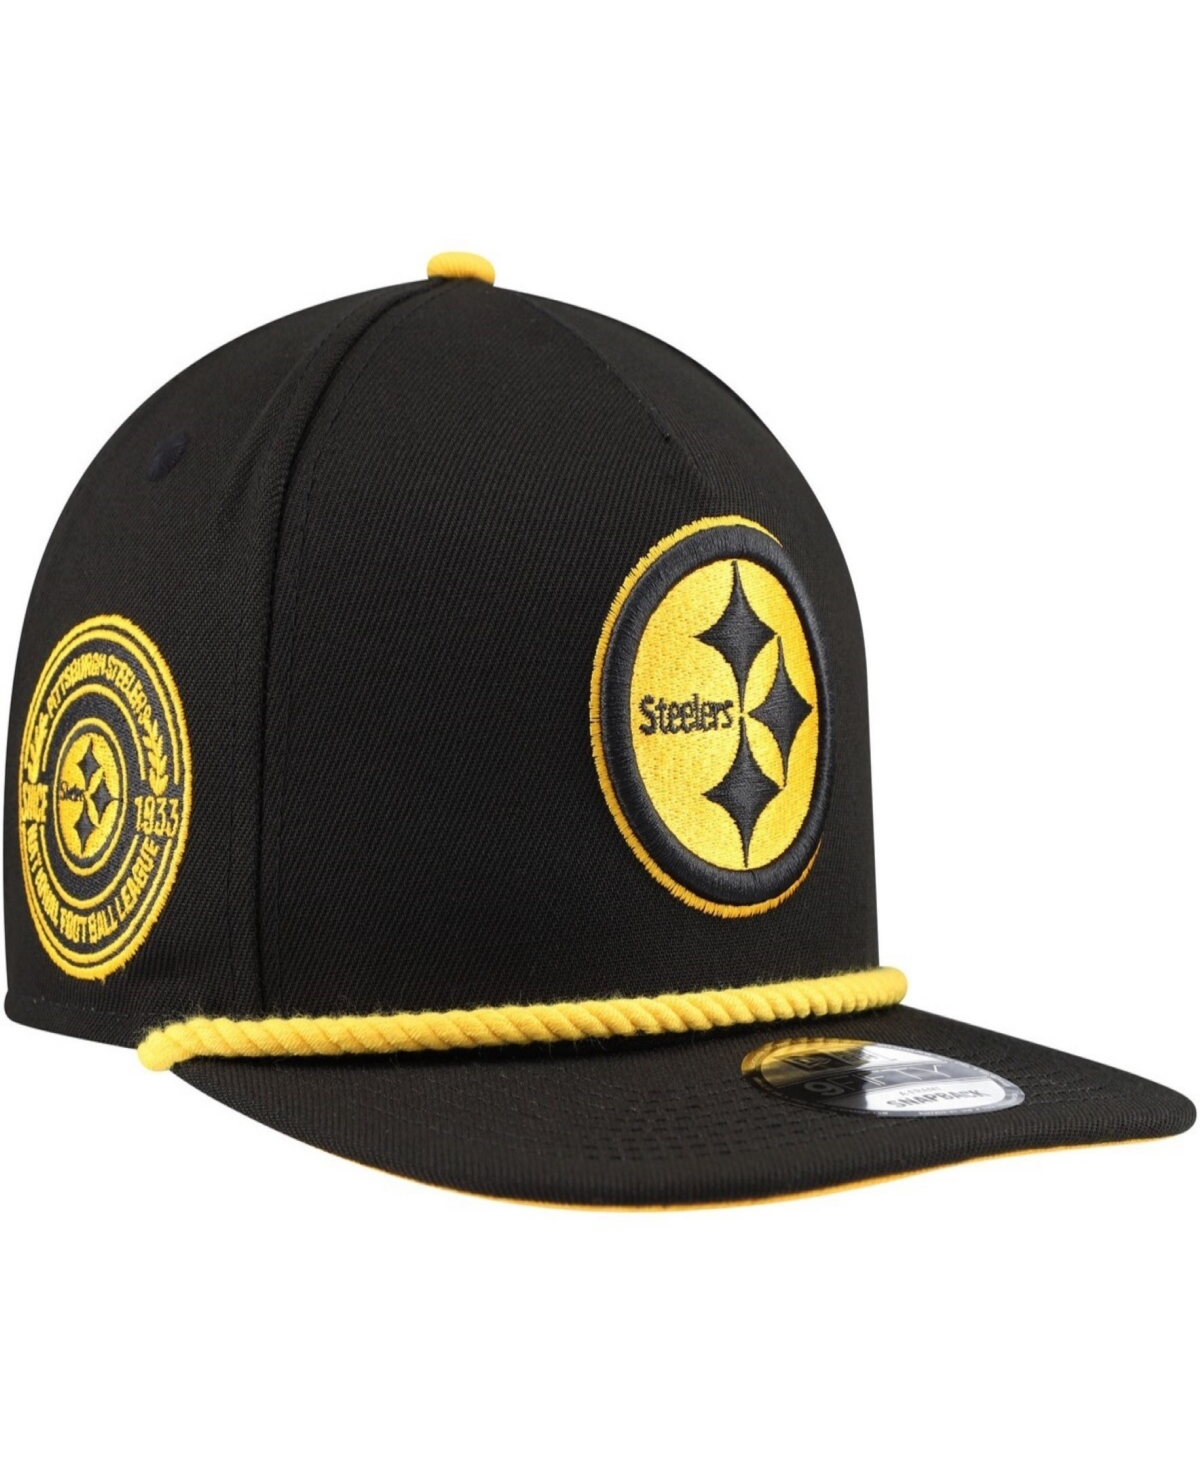 Men's Black Pittsburgh Steelers Captain Snapback Hat - Black